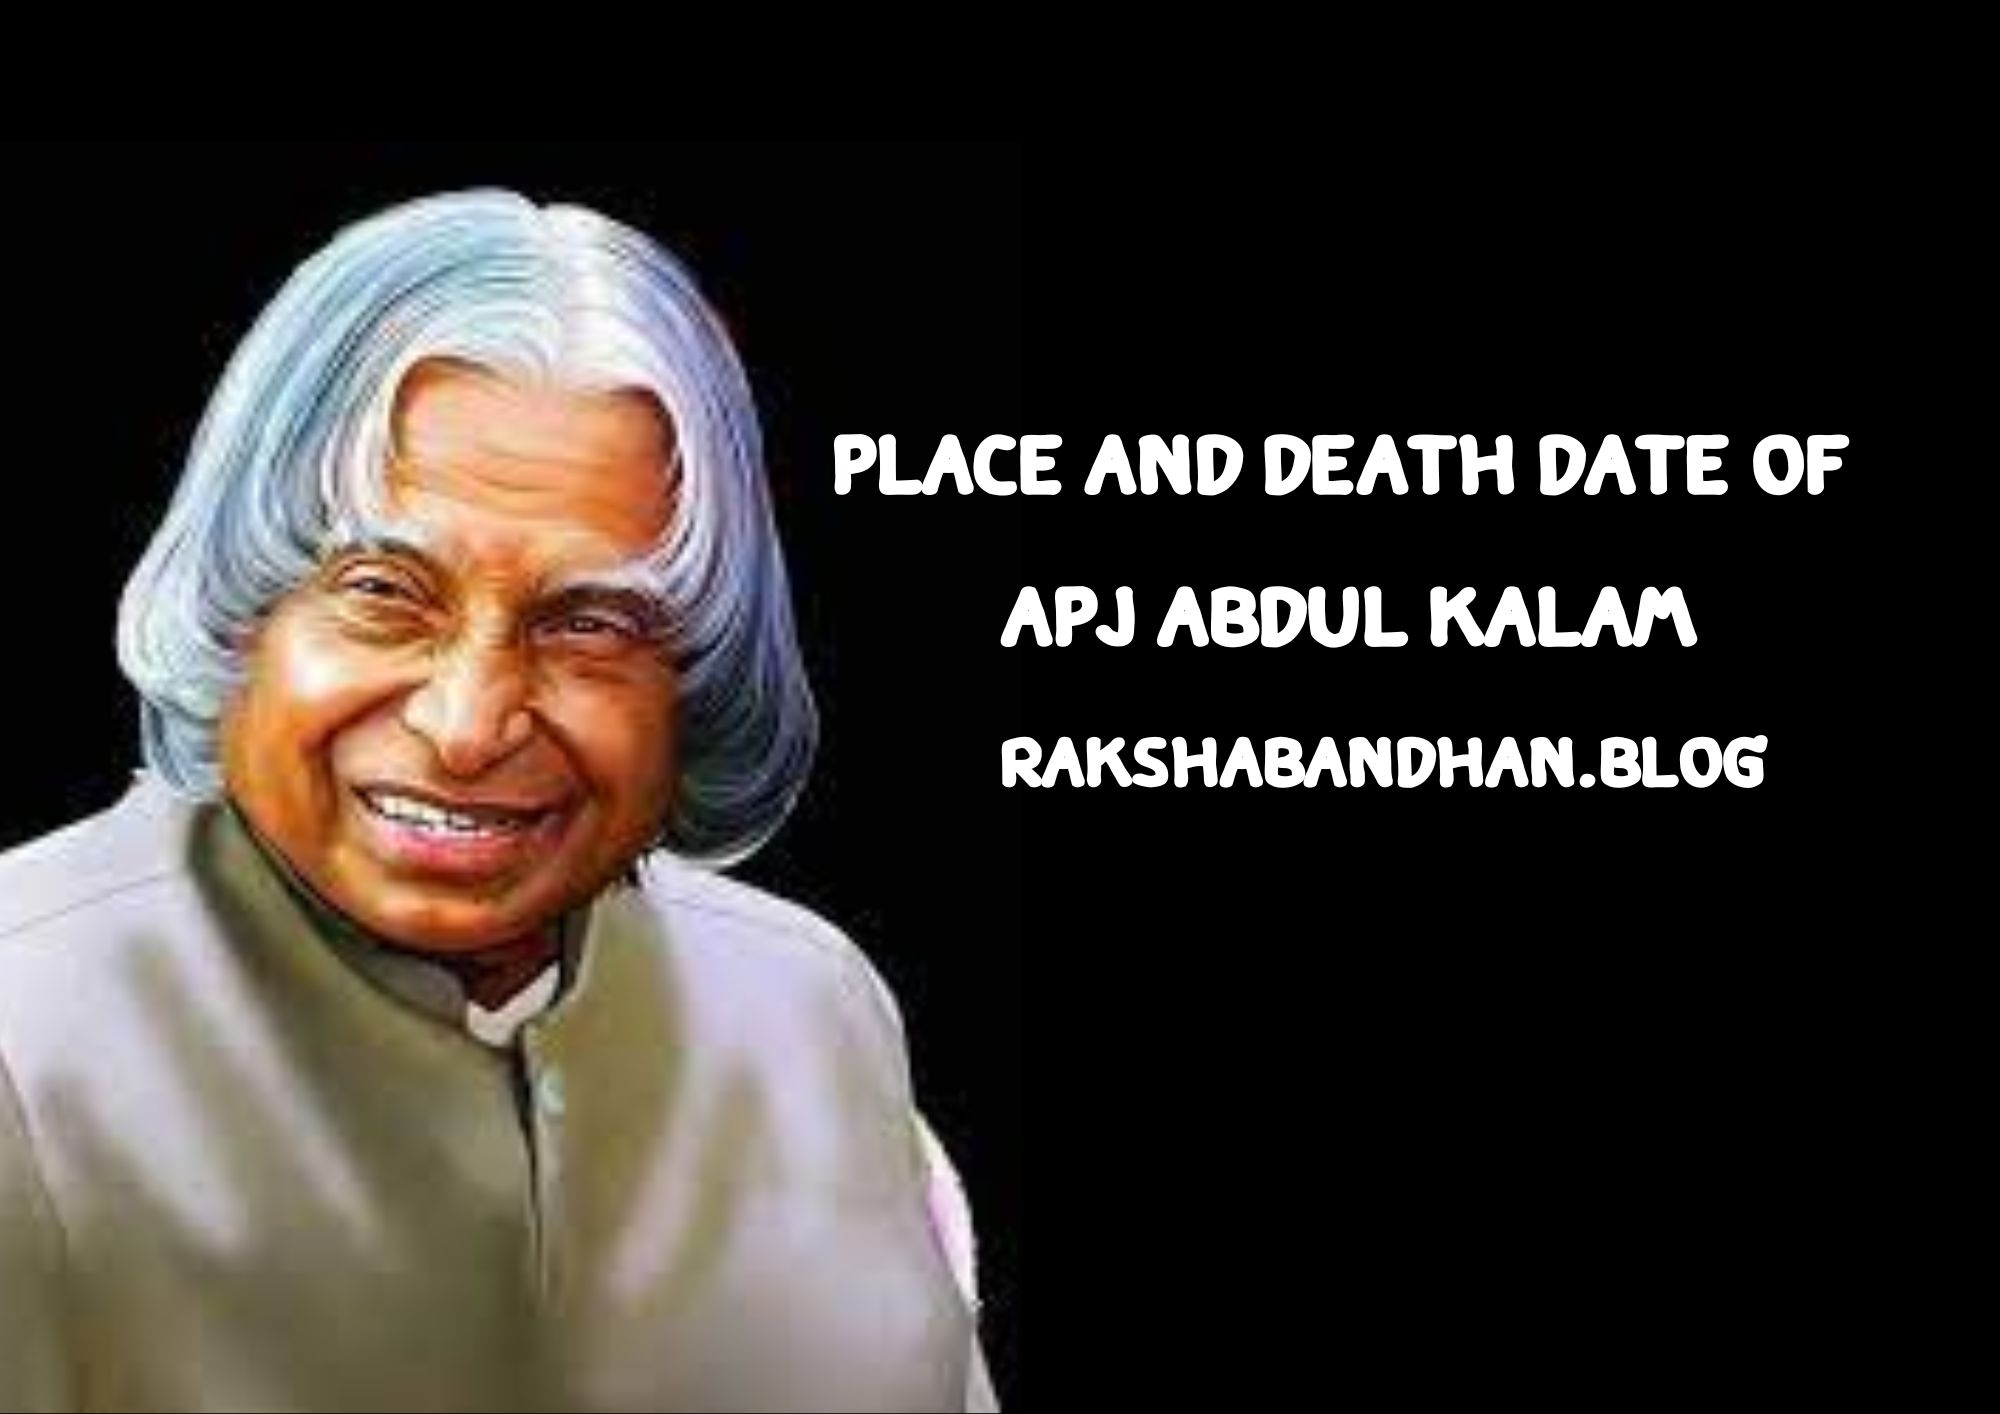 Place And Death Date Of Apj Abdul Kalam - Apj Abdul Kalam Death Date And Place, When Did Abdul Kalam Died